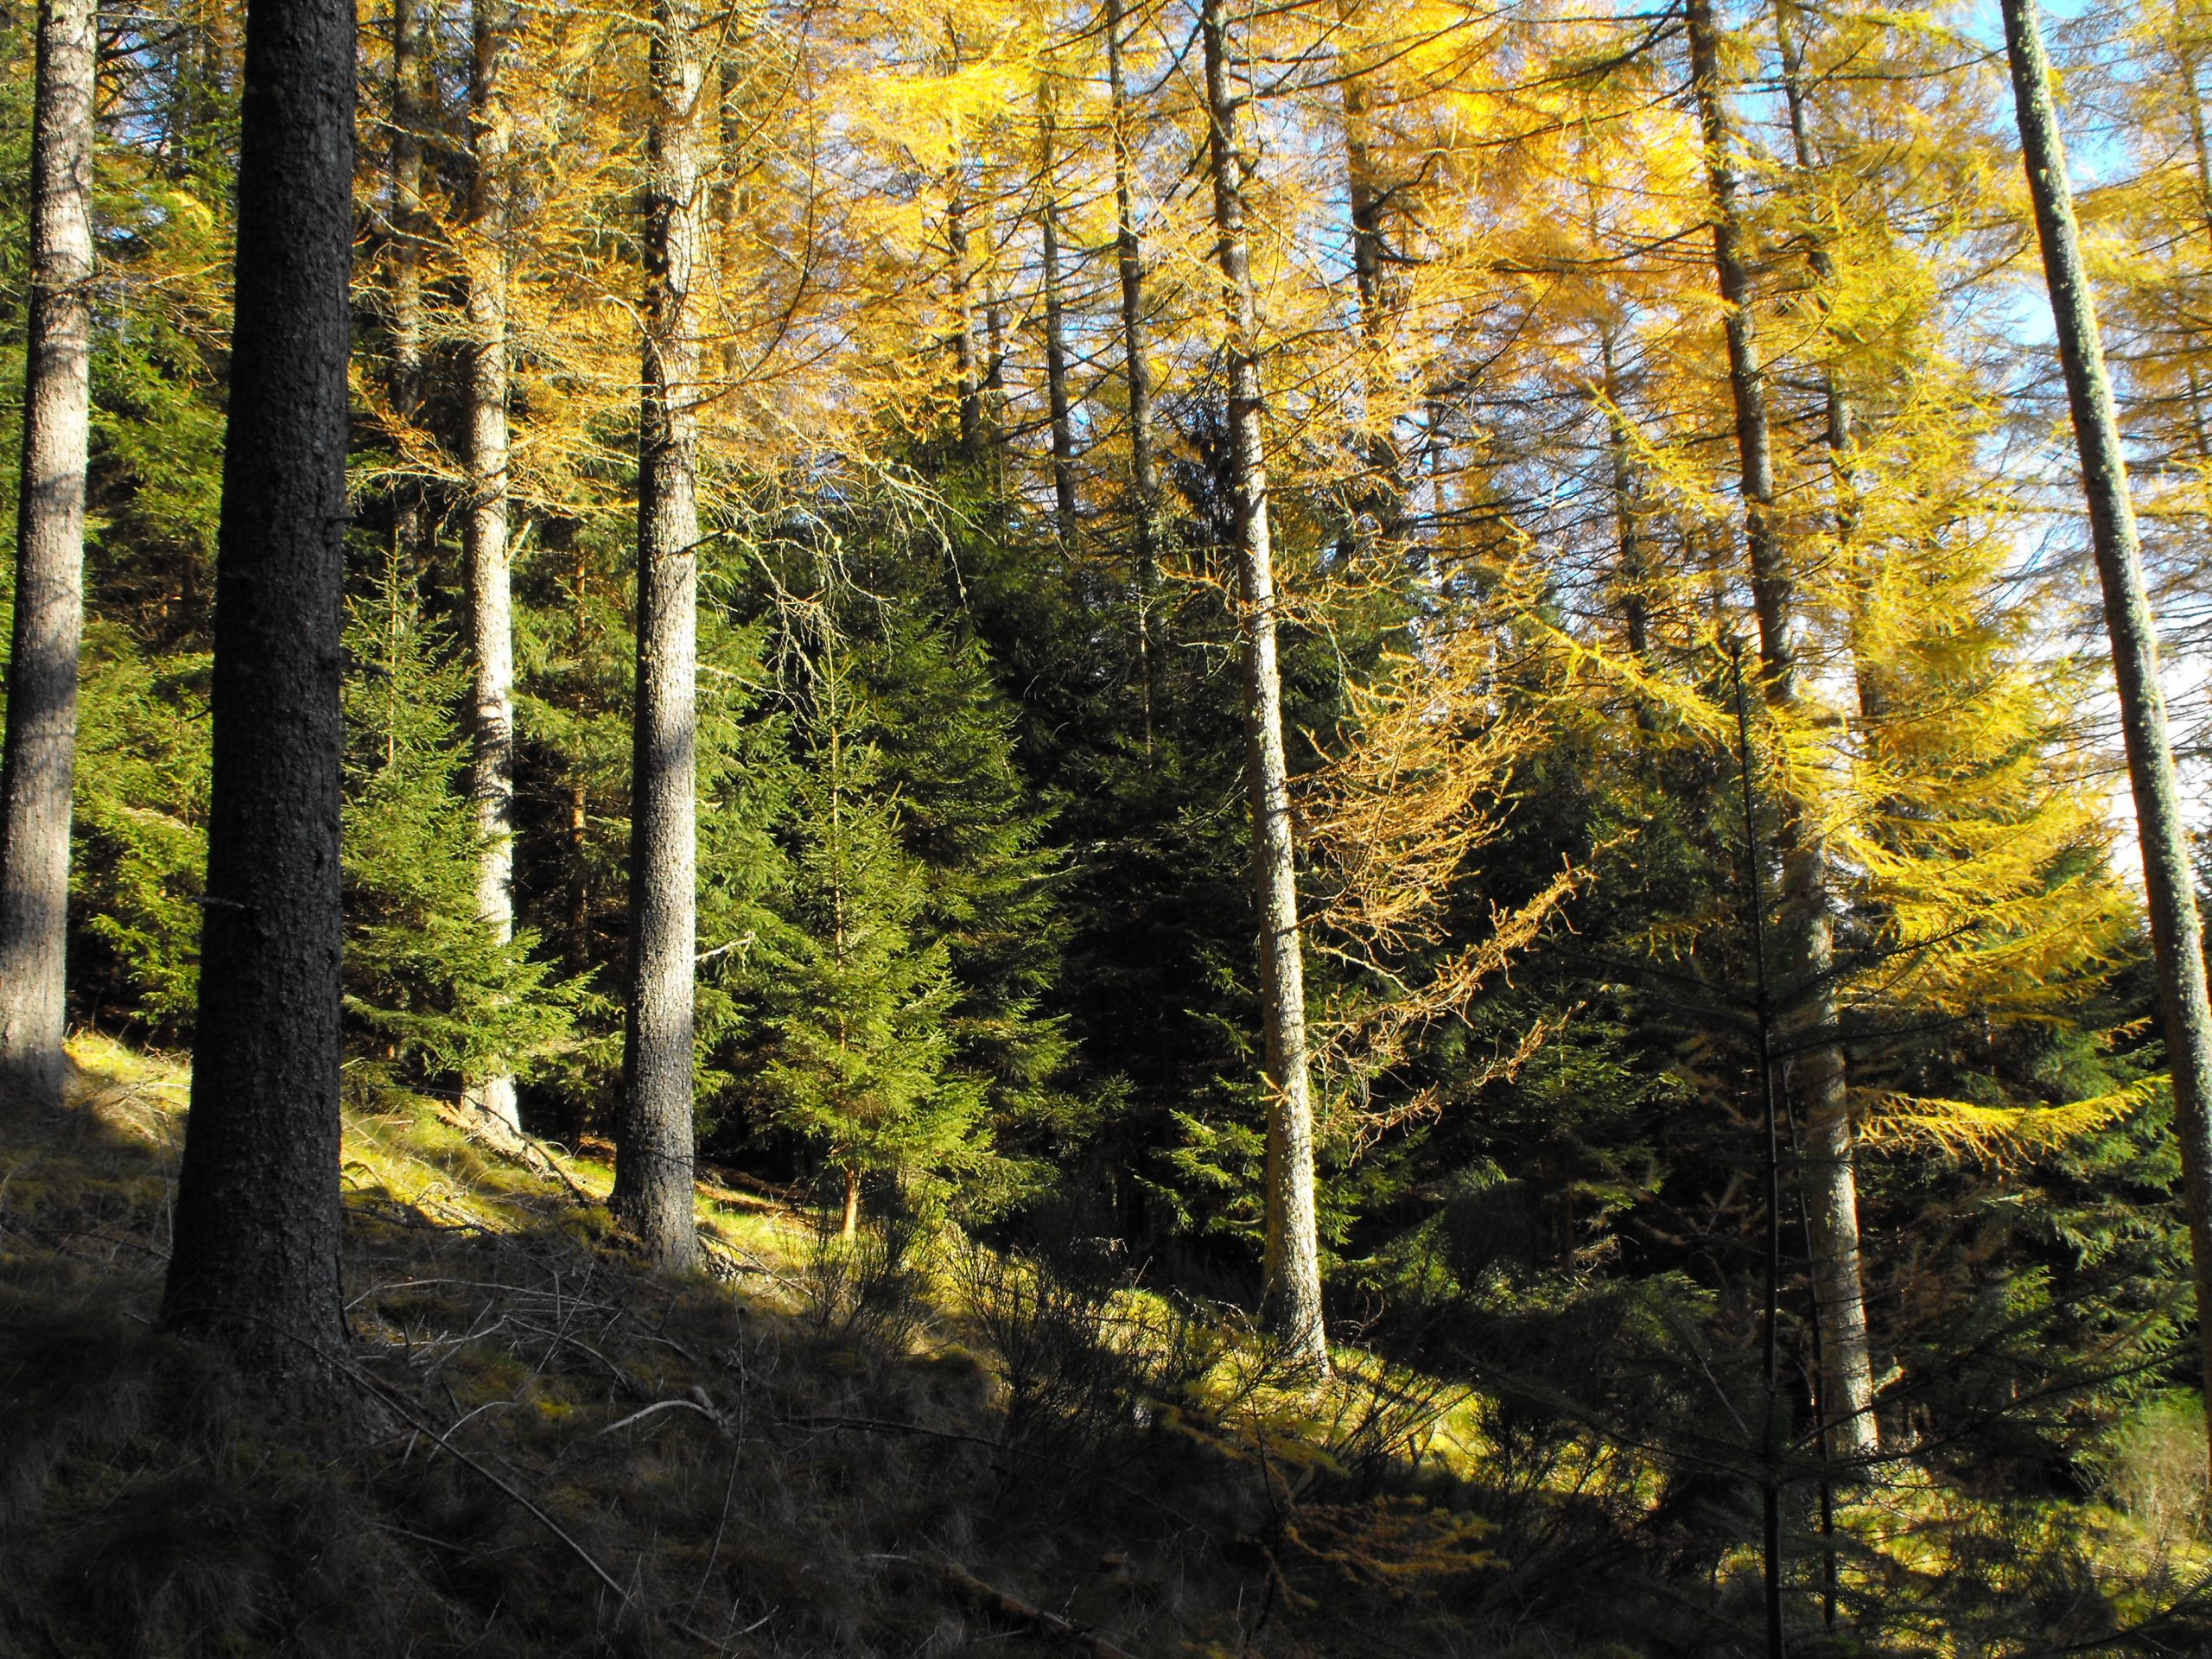 European larch with understorey of Norway spruce.